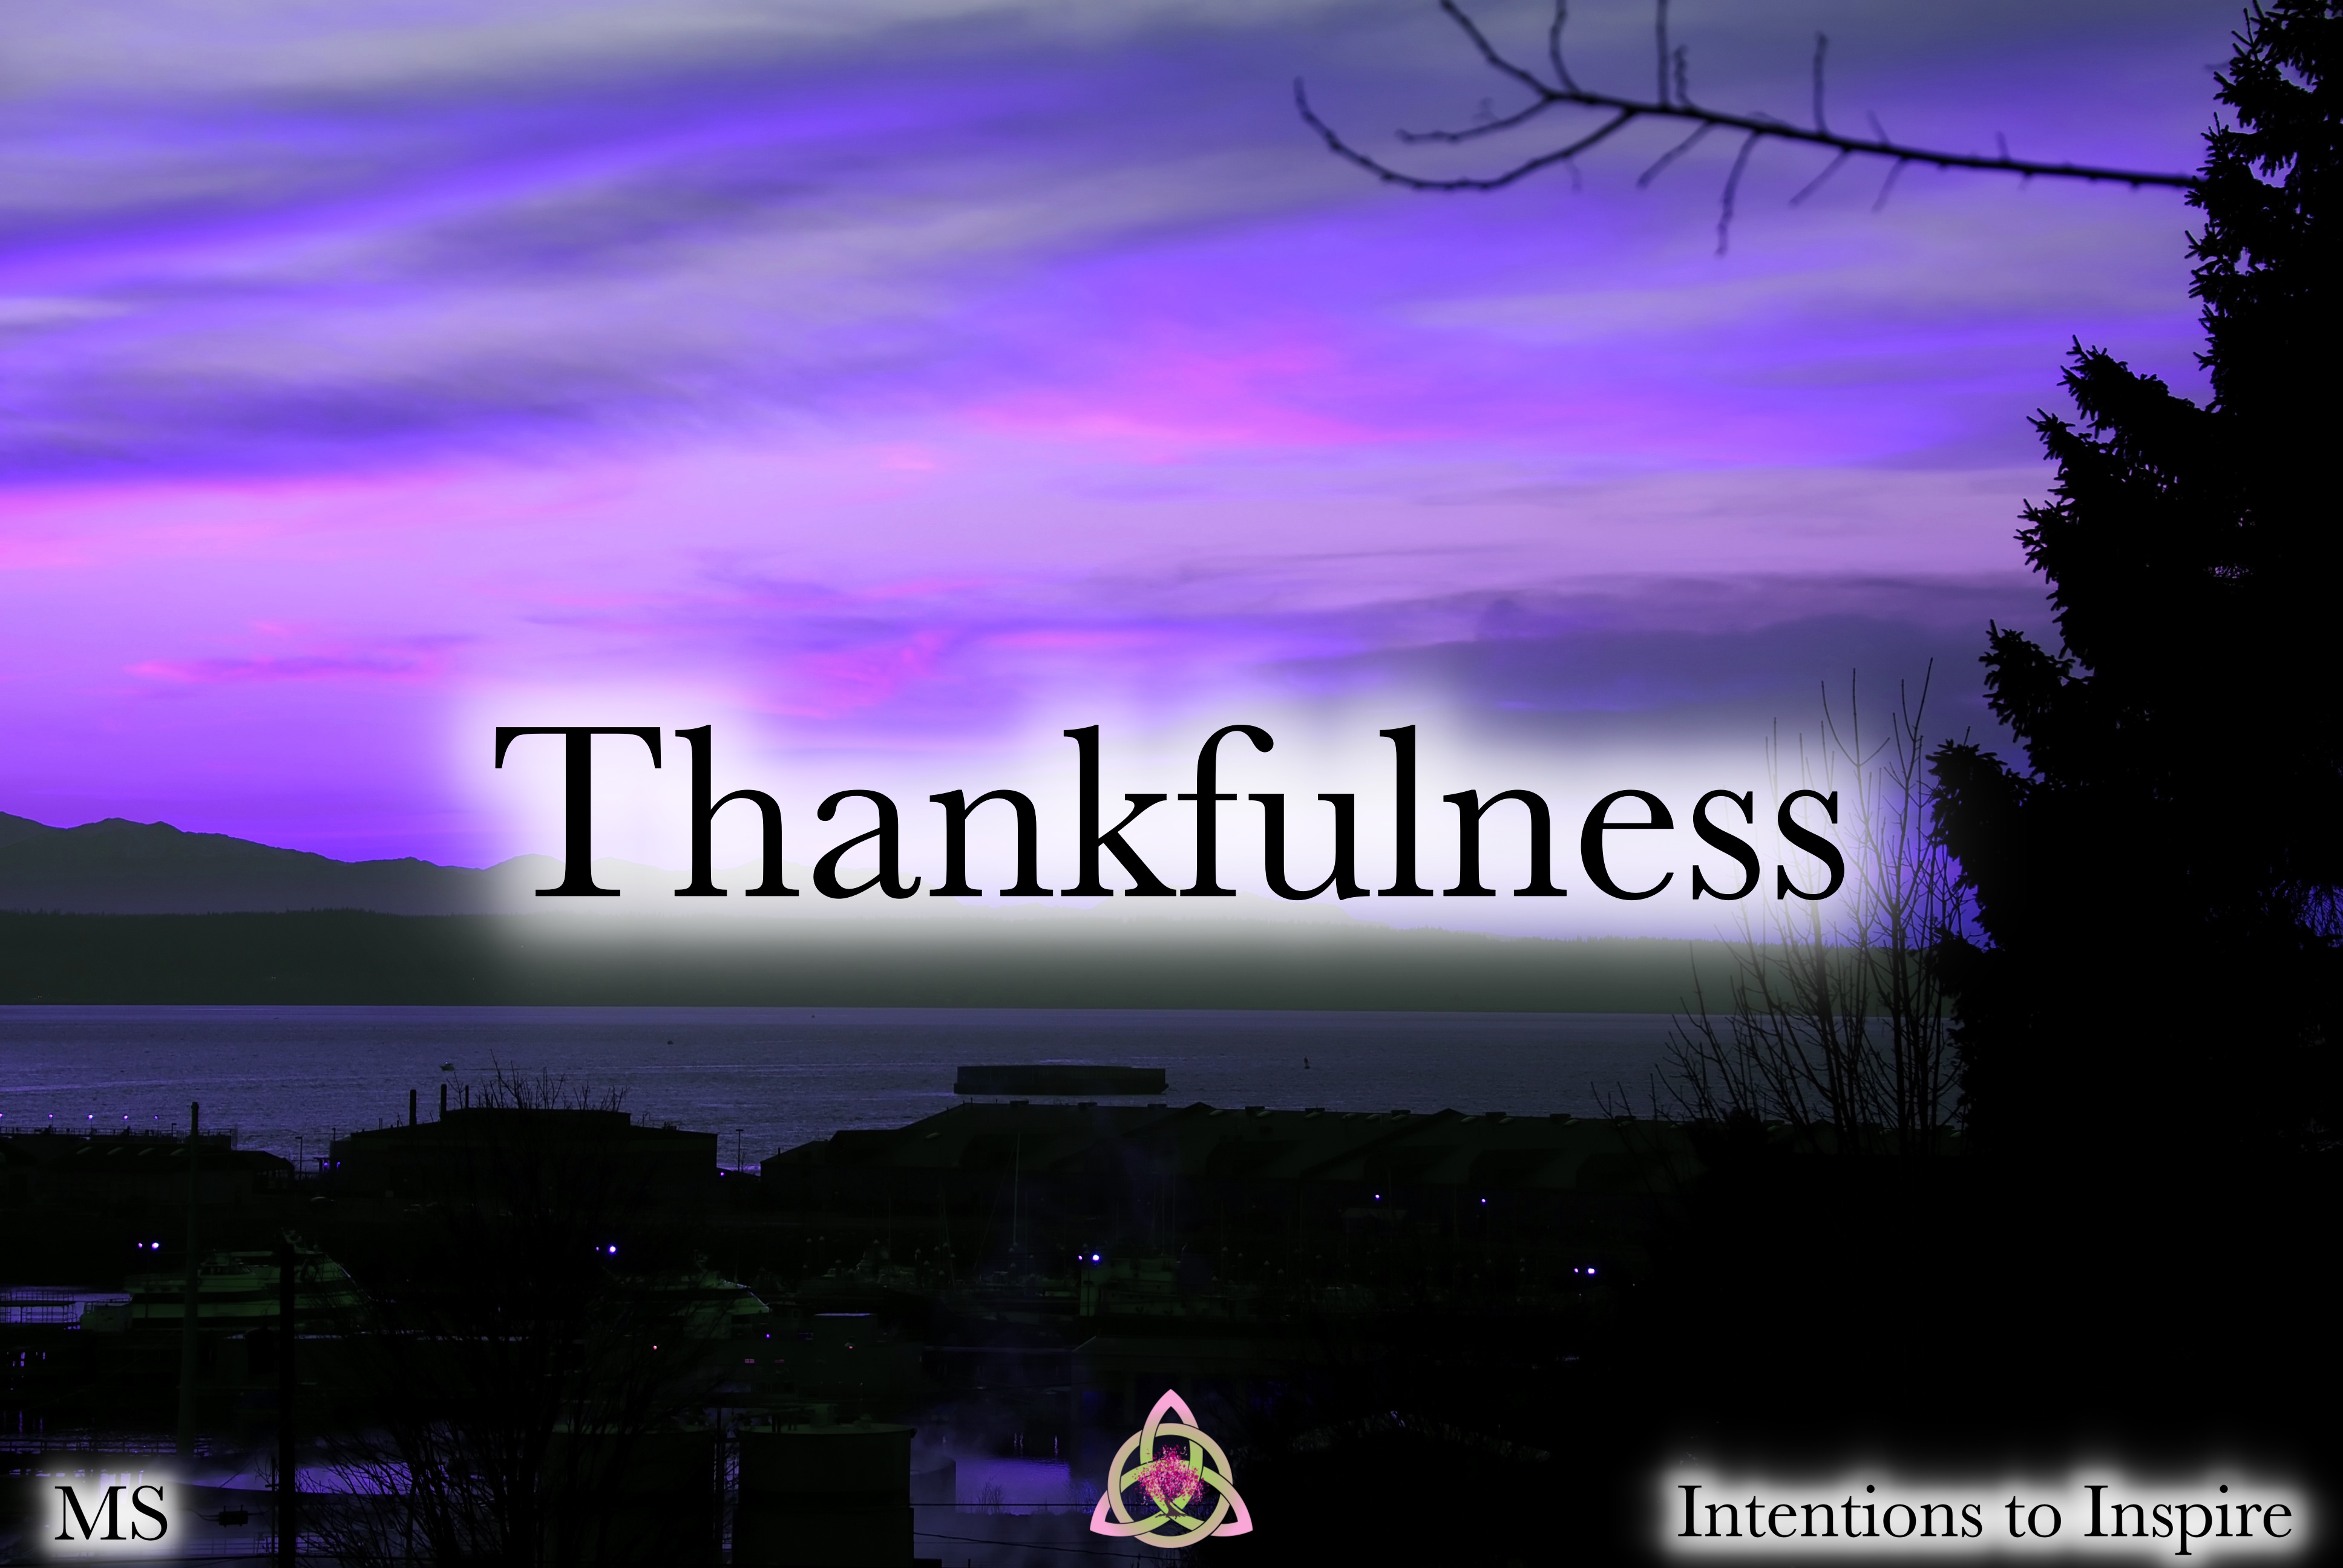 266-38-7-Thankfulness-MS 2